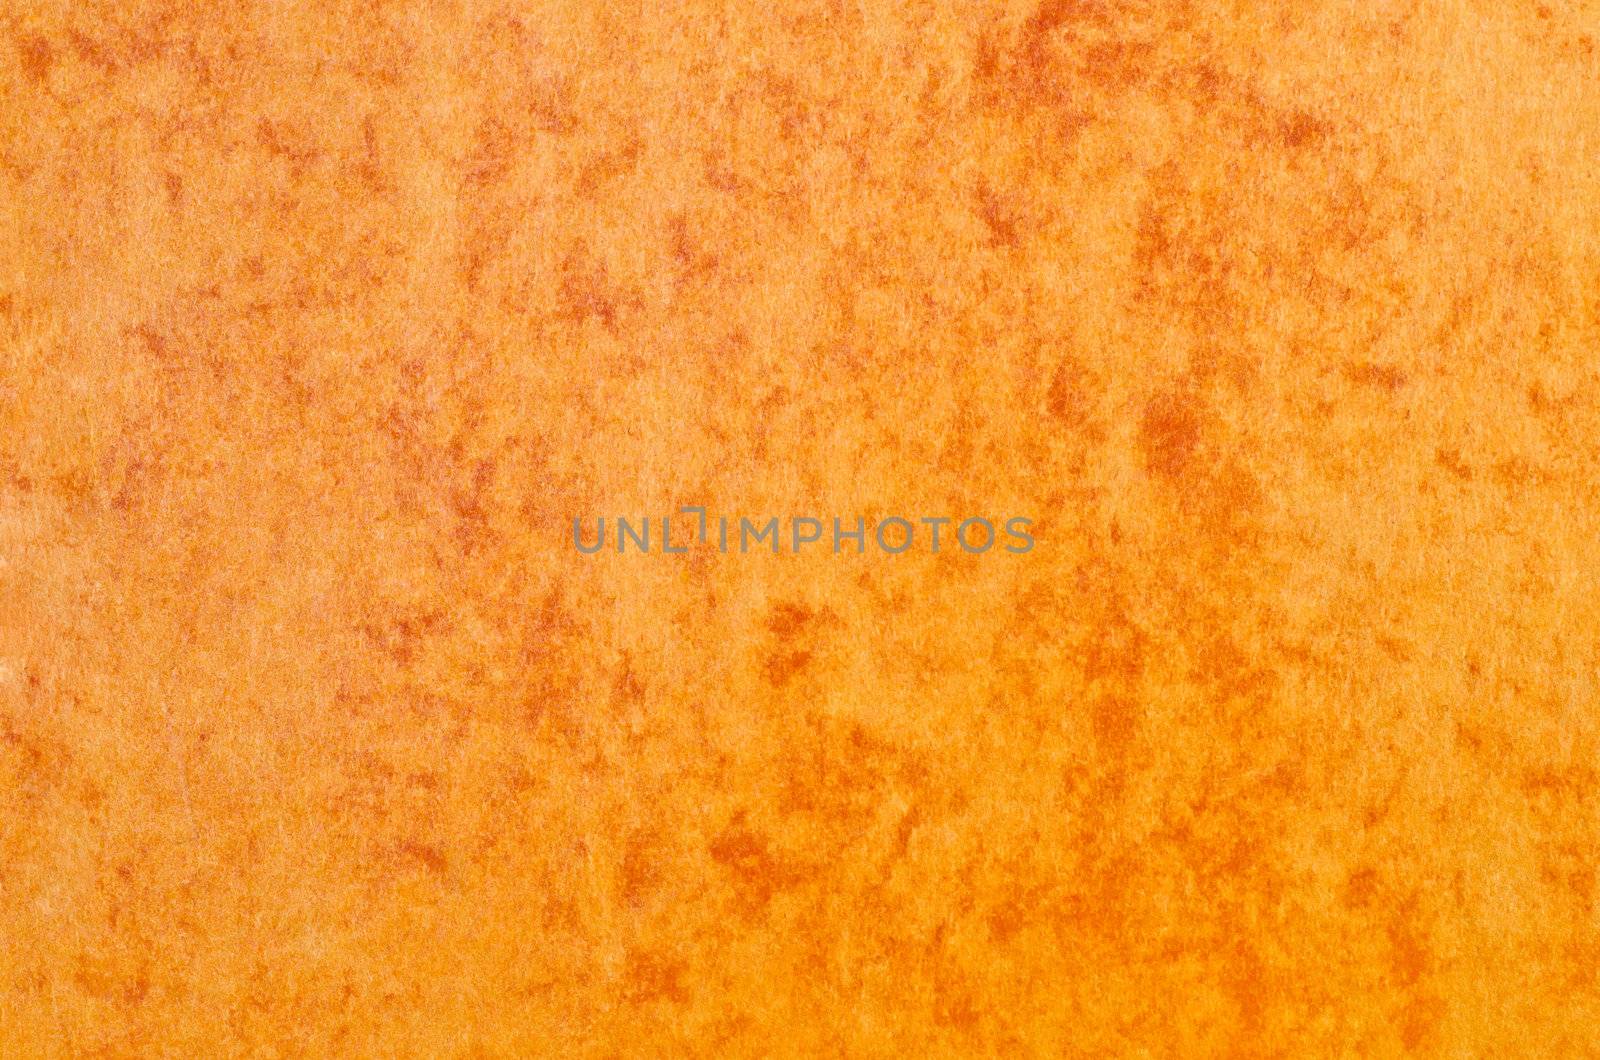 Marbled Orange Paper Texture by frannyanne